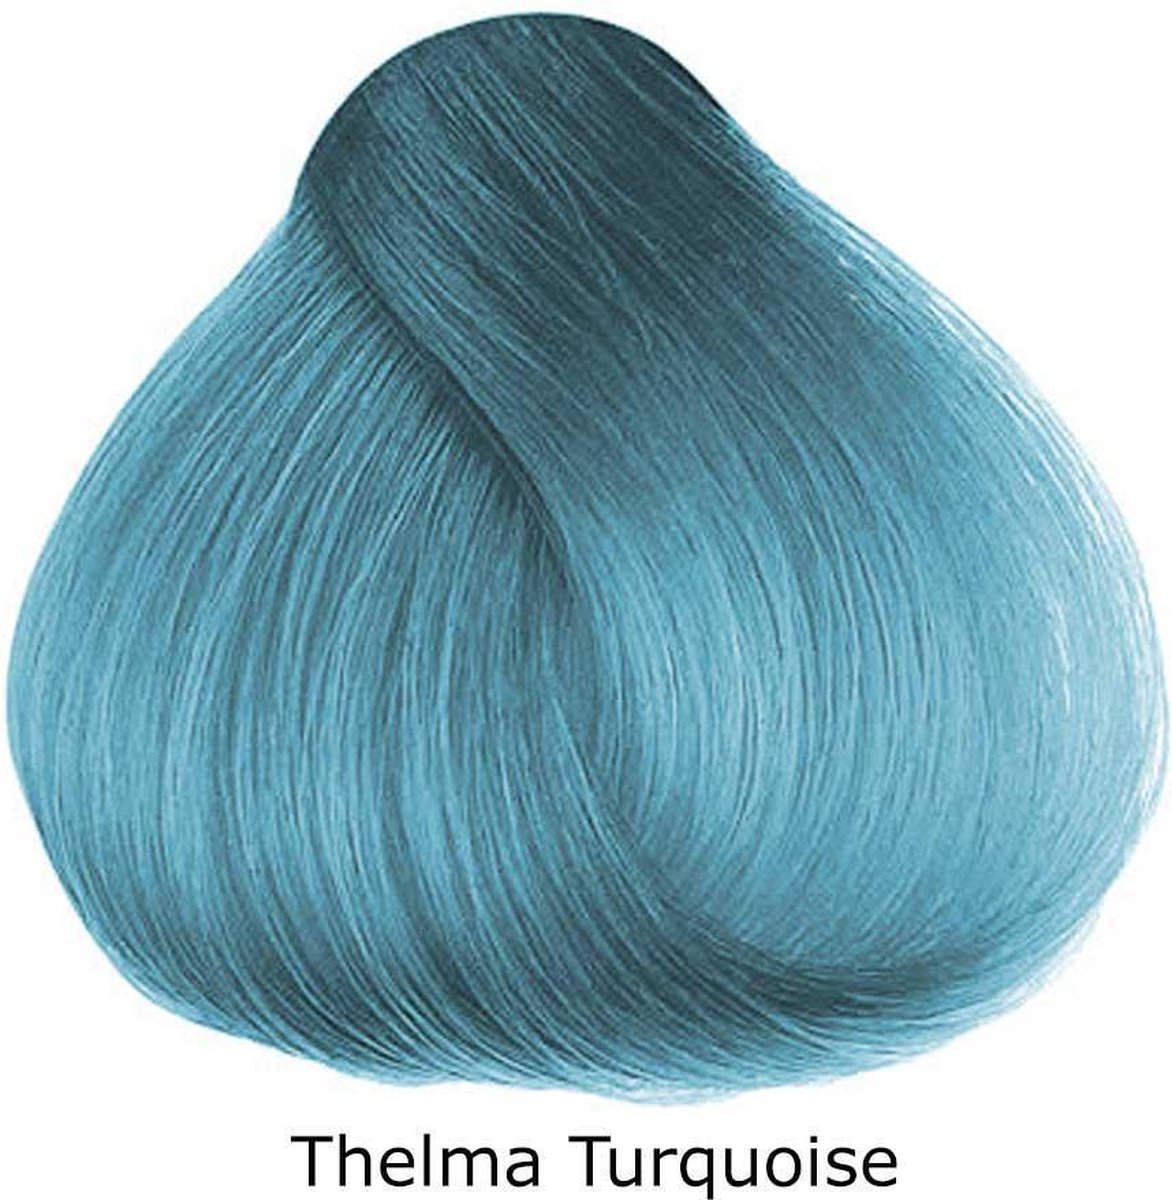 Chemicaliën herten Conform Hermans Amazing Haircolor Semi permanente haarverf Thelma Turquoise  Turquoise | bol.com